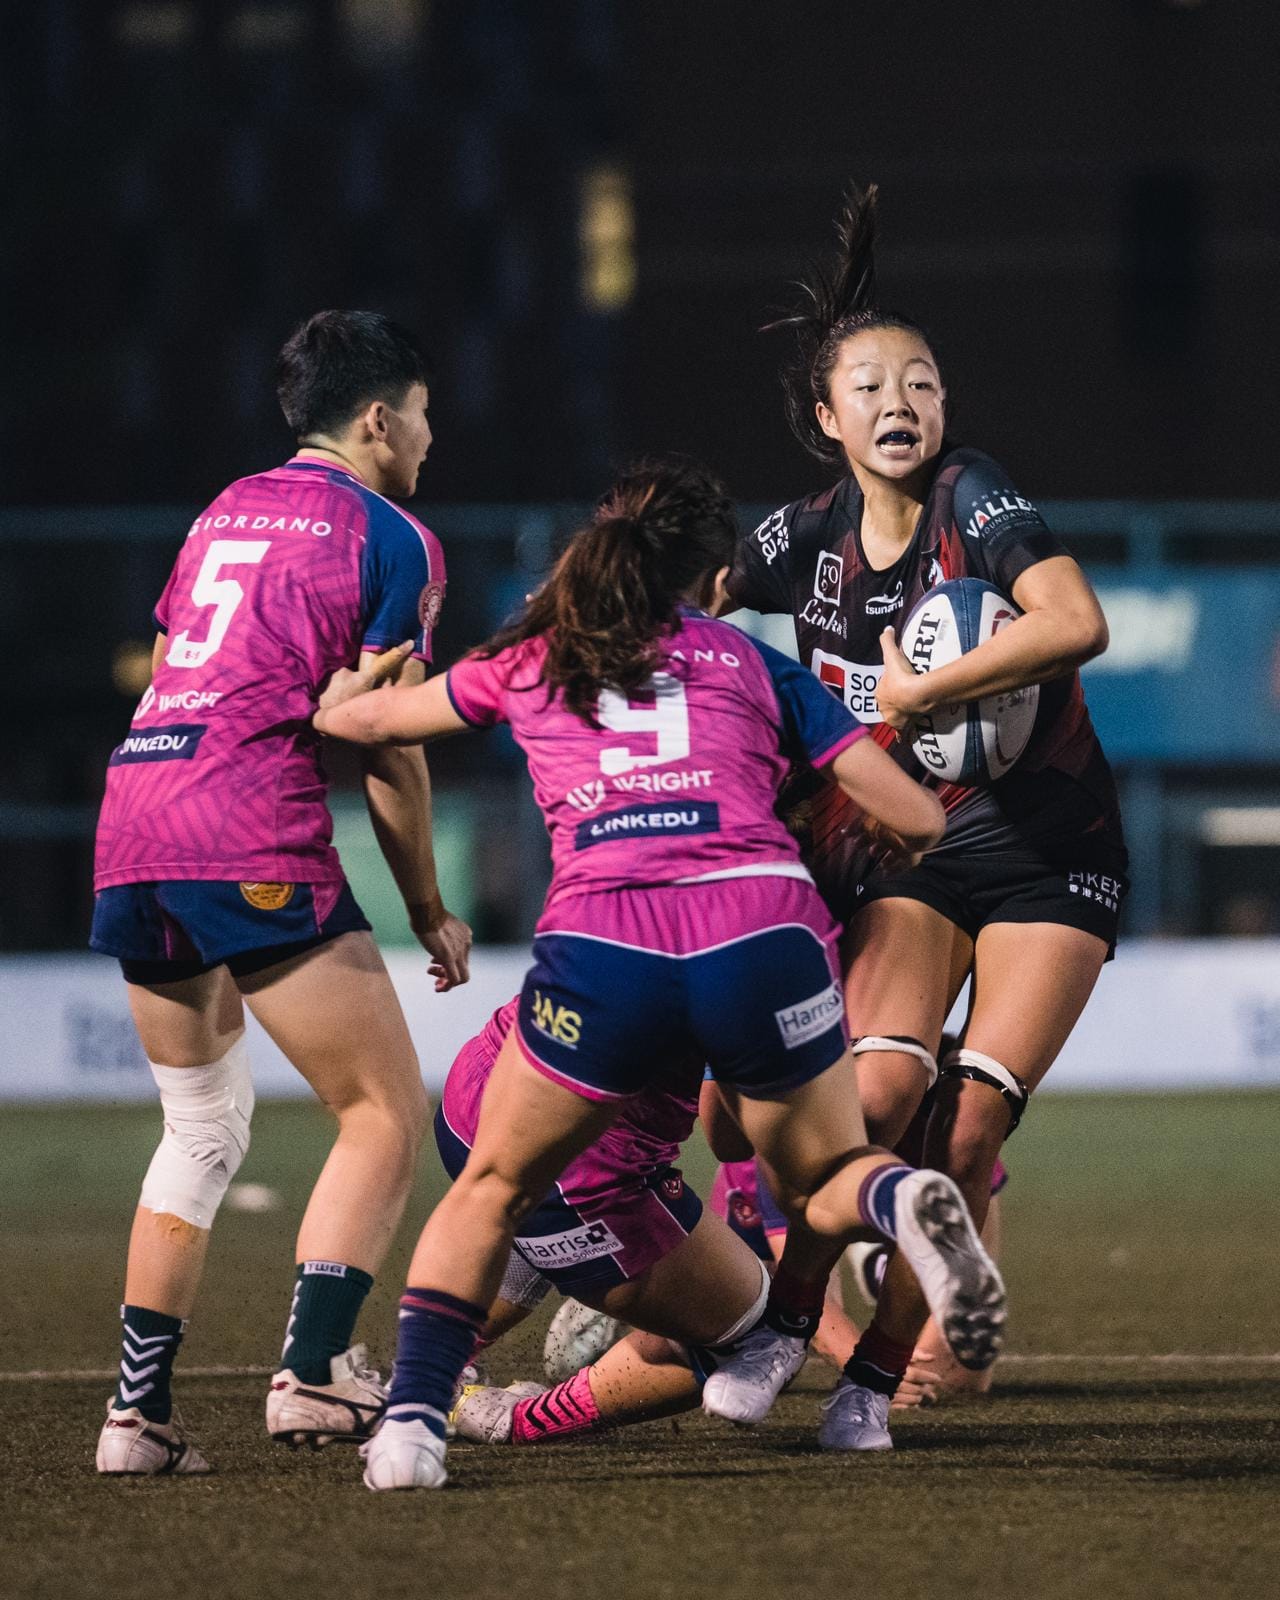 Hong Kong pro rugby player, Chloe Chan